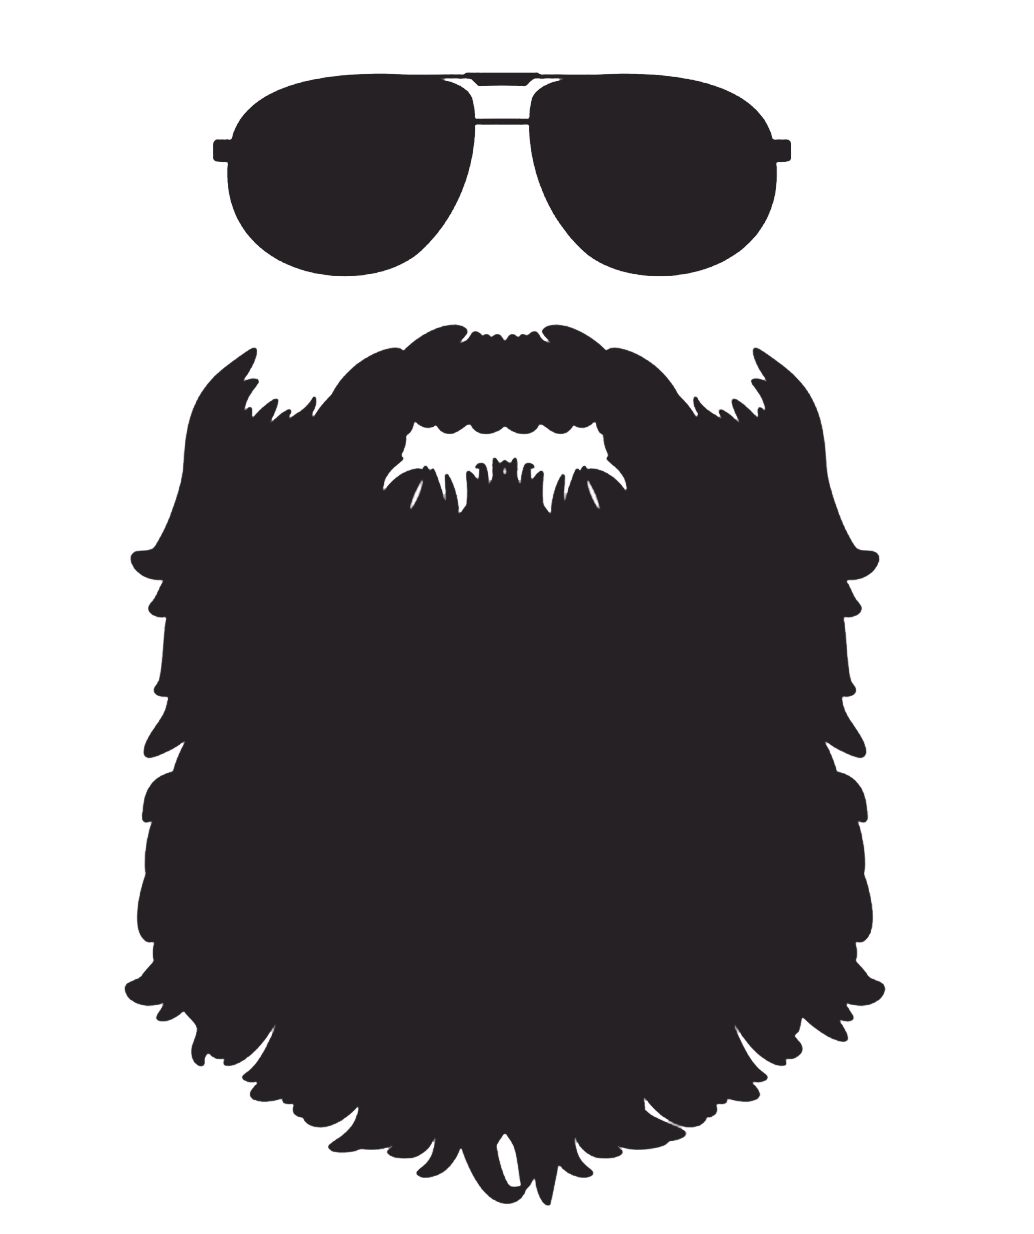 Beard Silhouette Clip art.